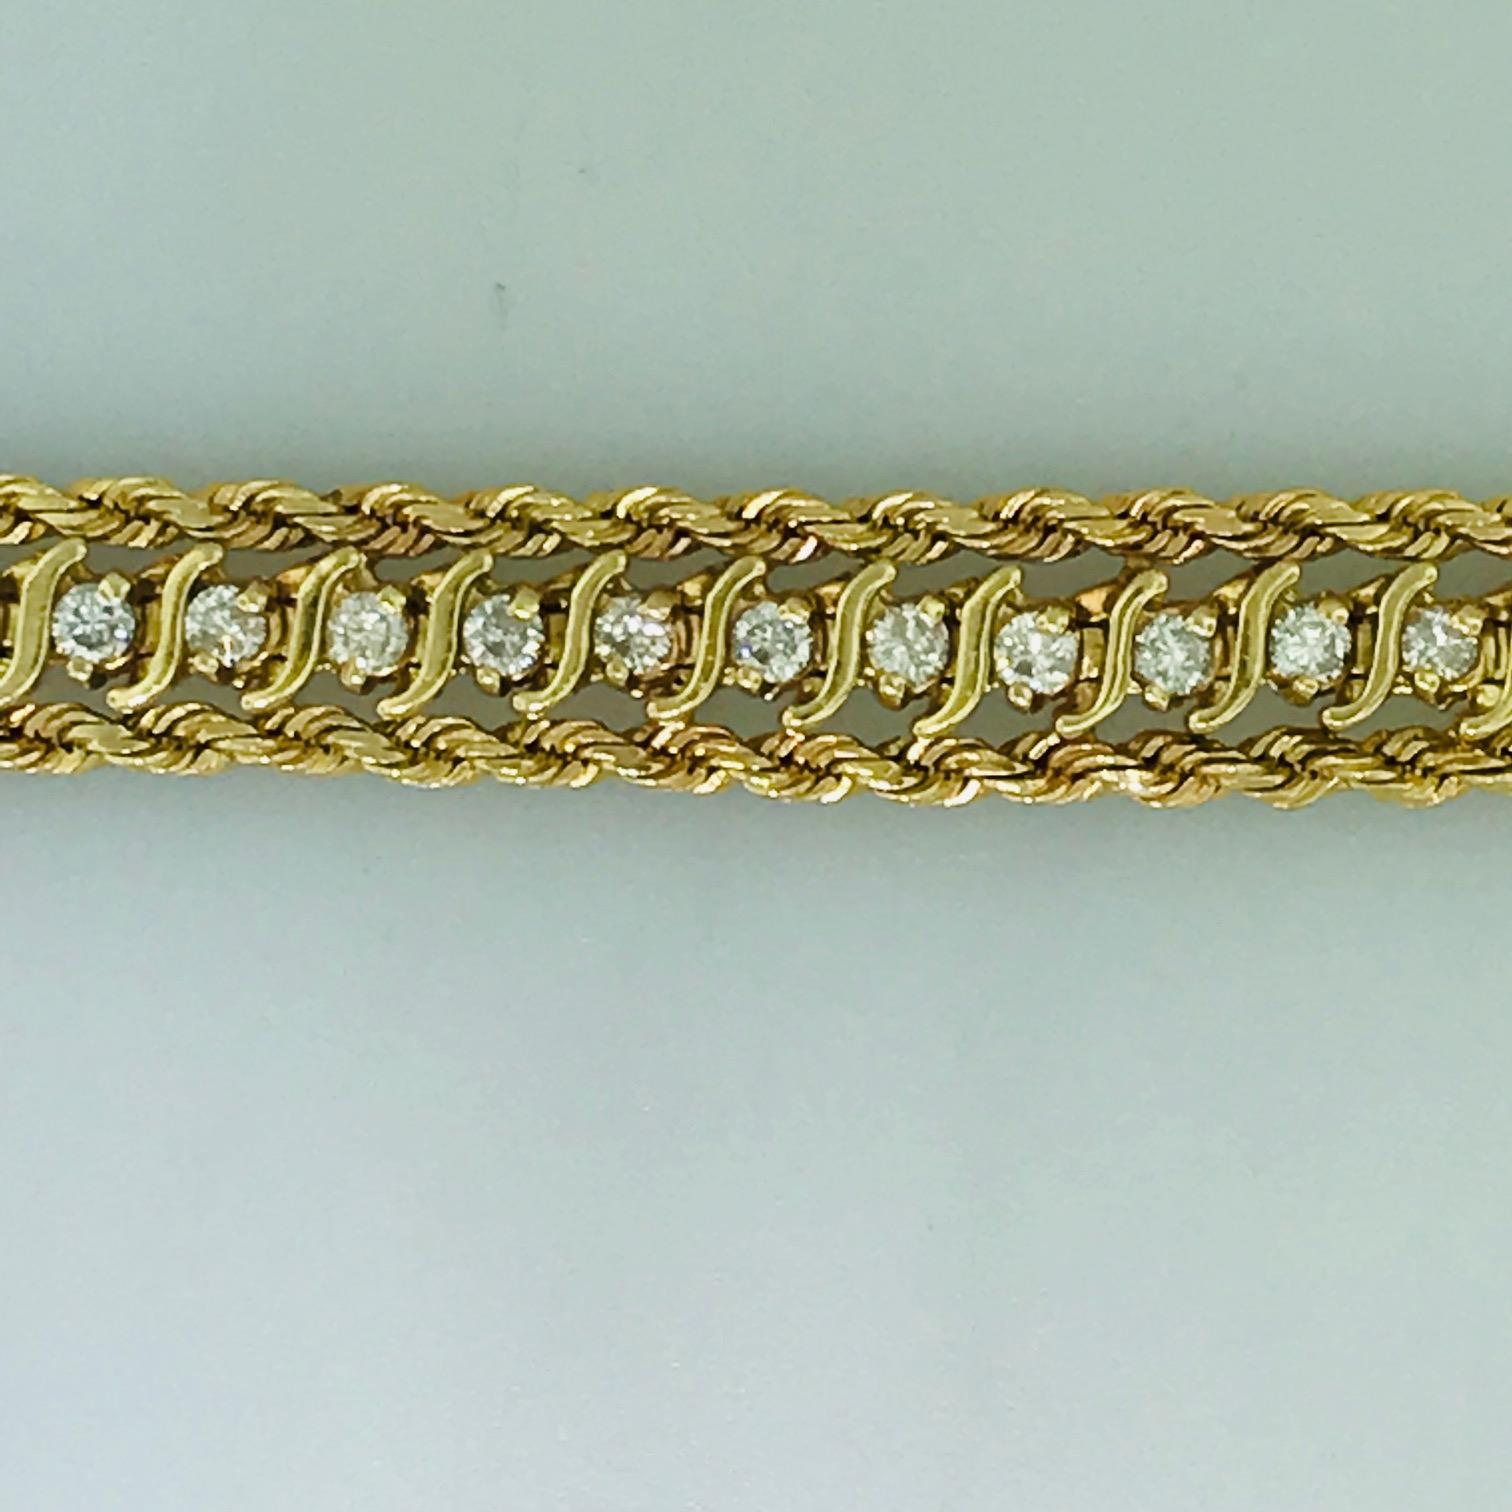 rope bracelet with diamonds